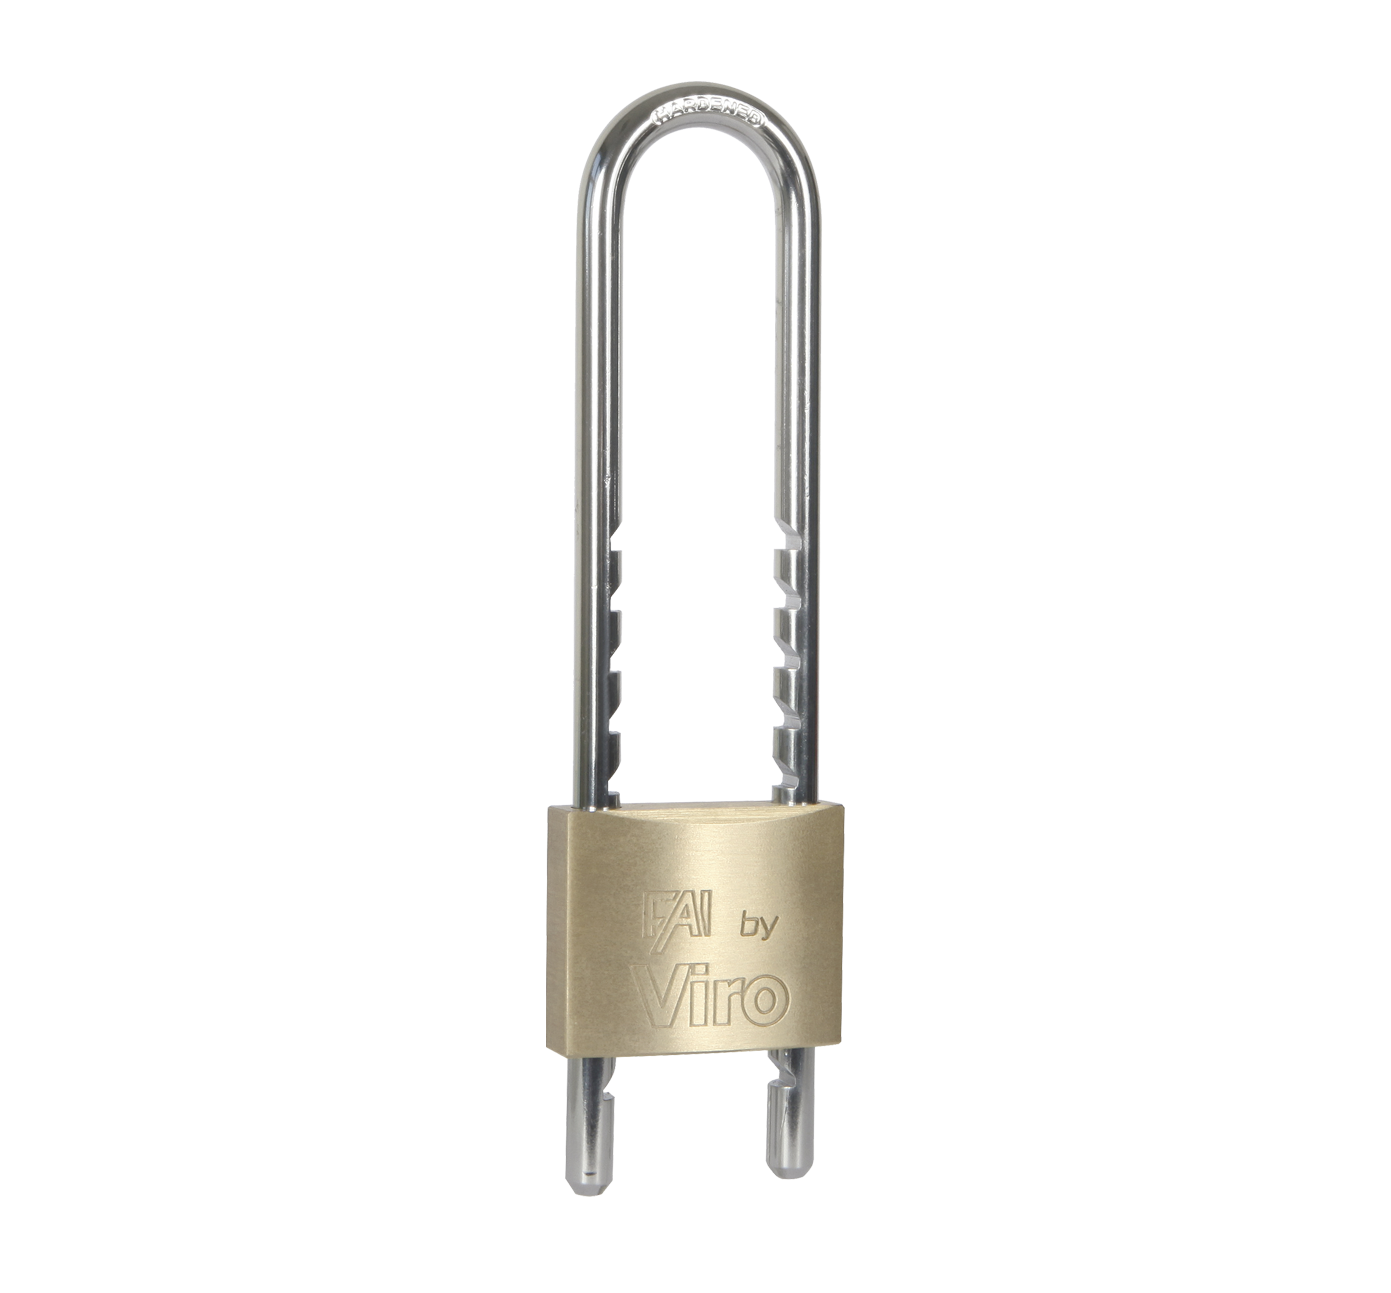 Fai by Viro rectangular padlock with adjustable shackle